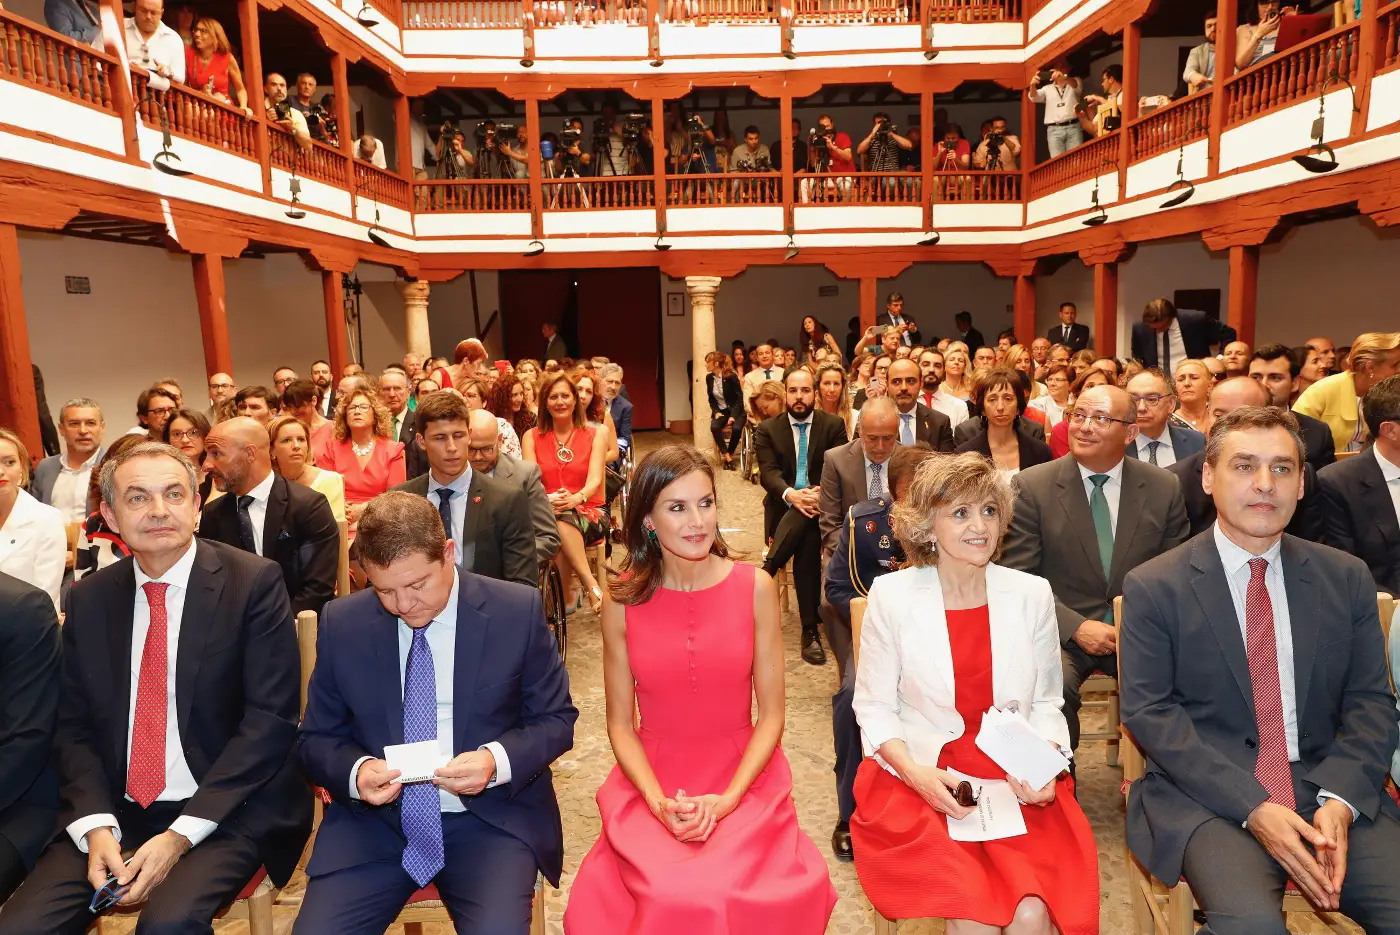 Queen Letizia in fuchsia Carolina Herrera dress and Steve Madden pumps